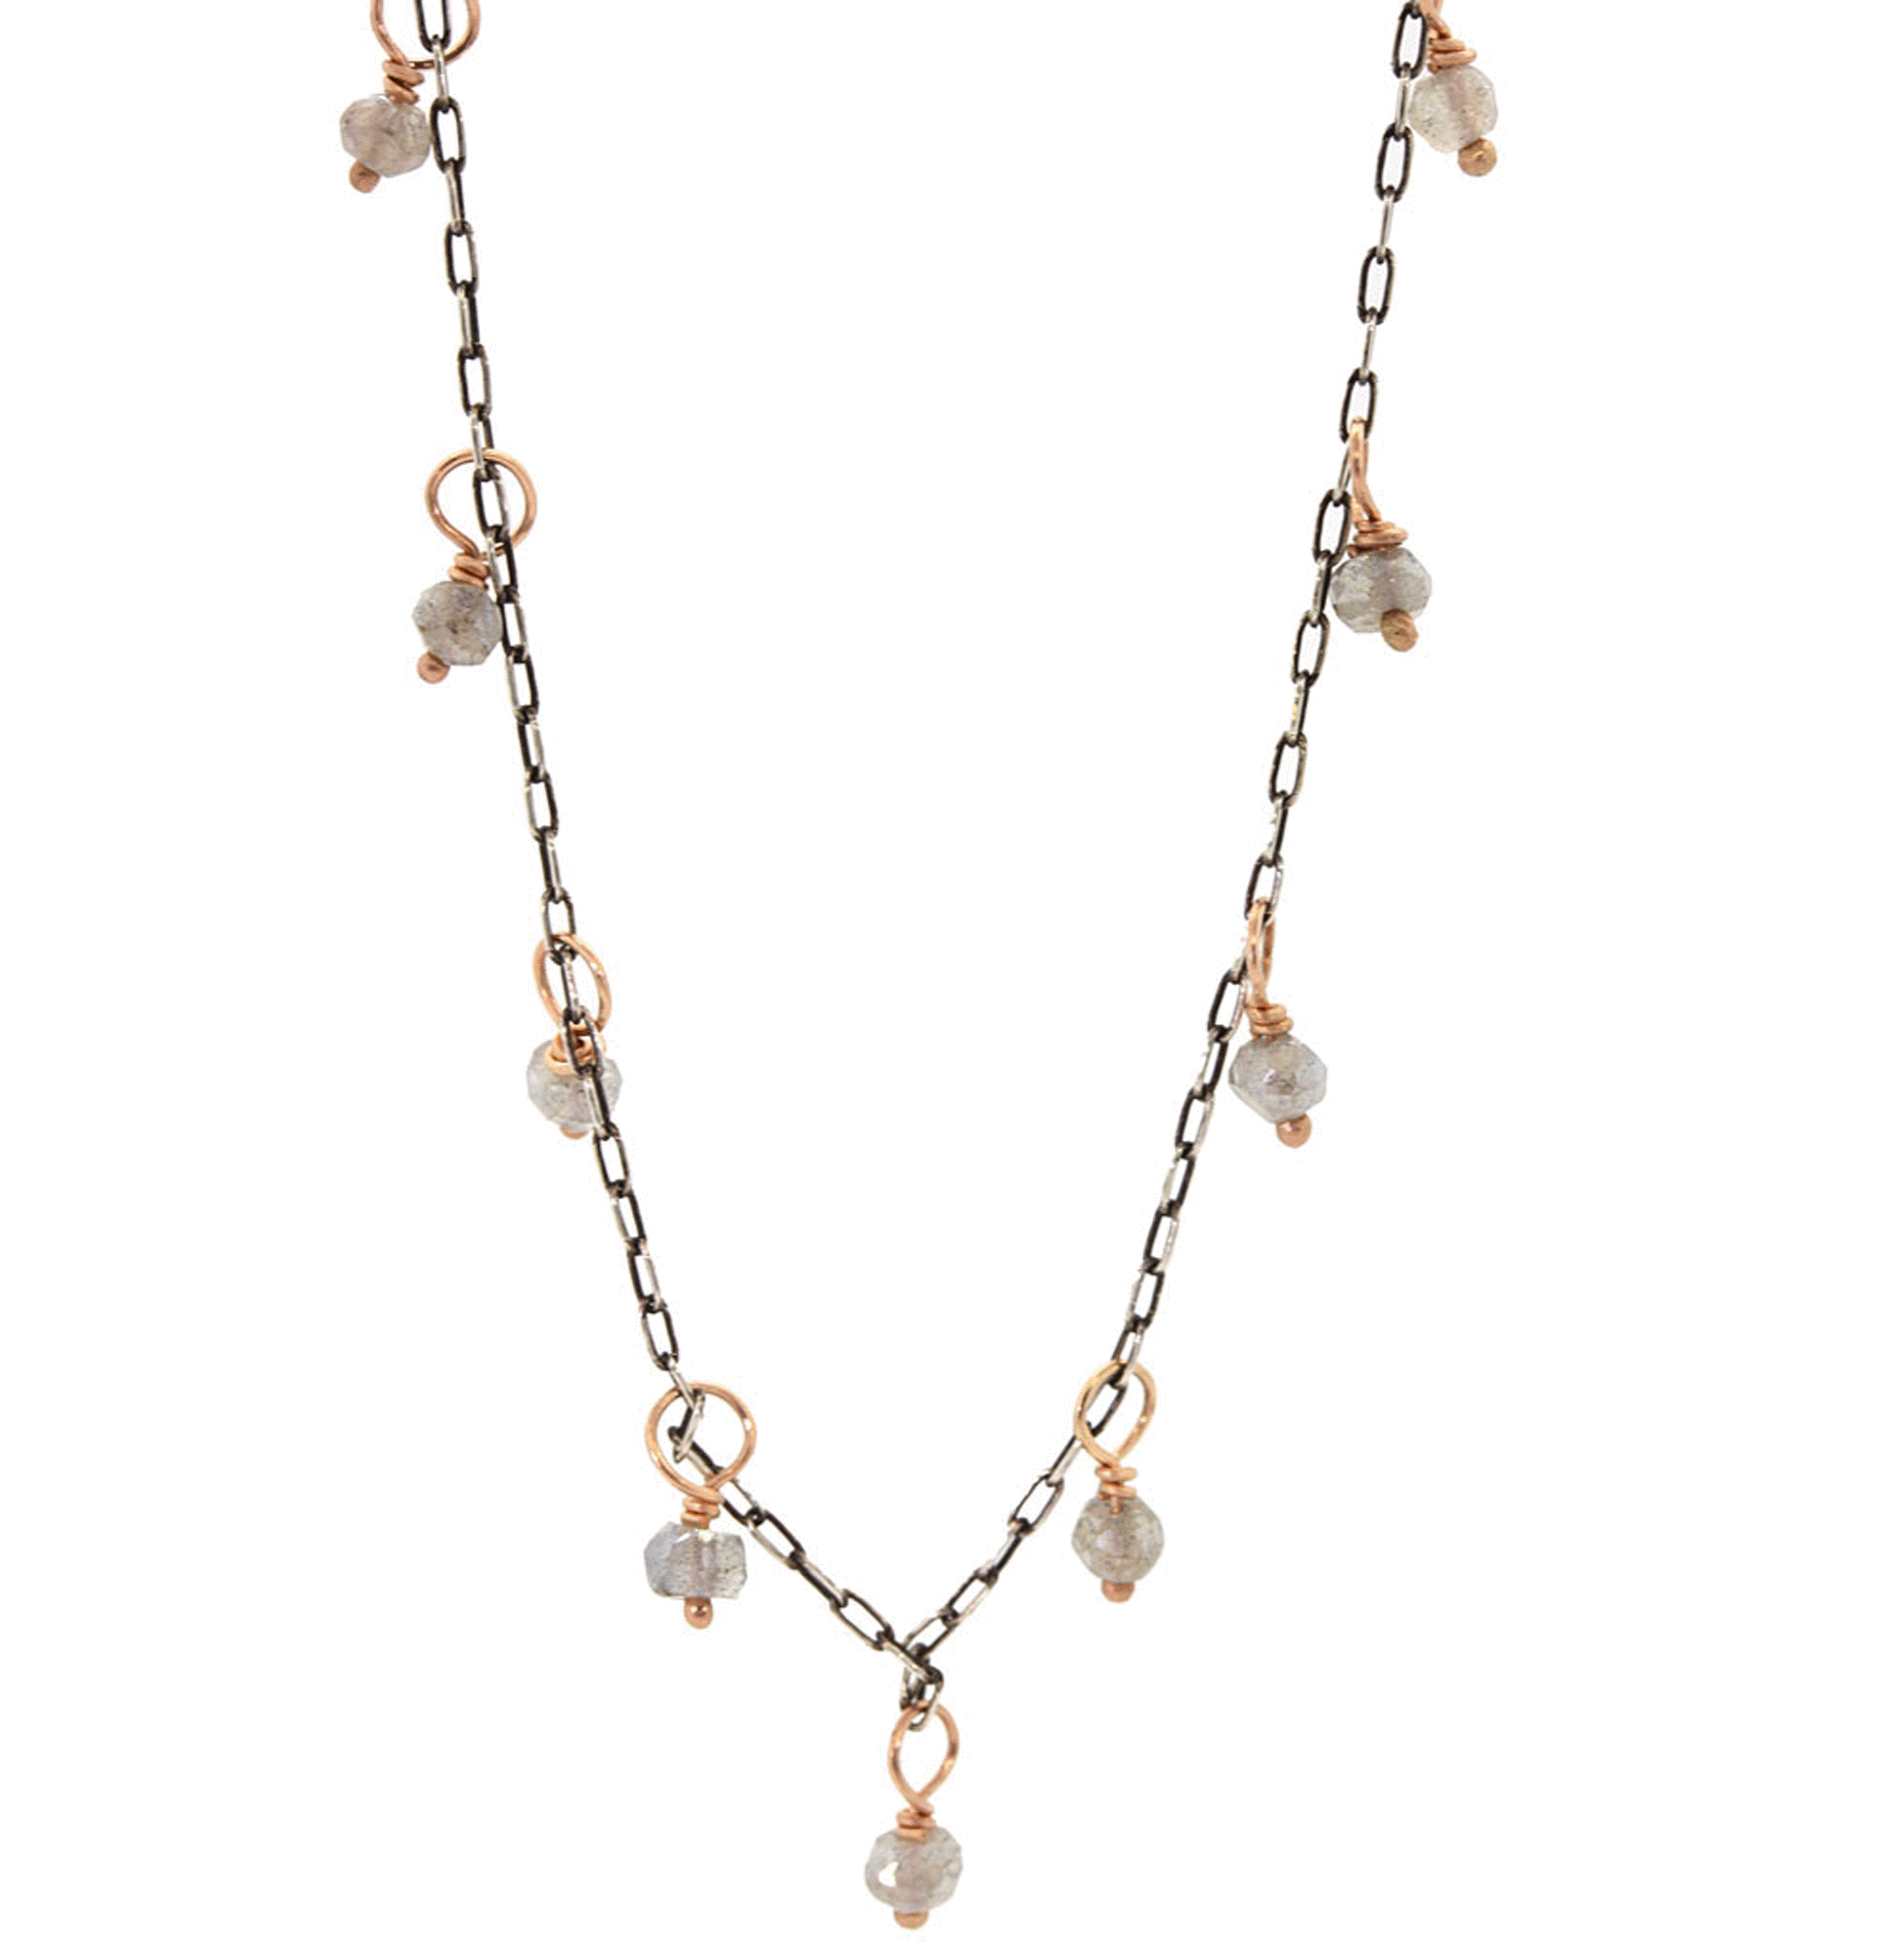 Gemstone Necklace - Handcrafted Labradorite Necklace - Rebecca Lankford Designs